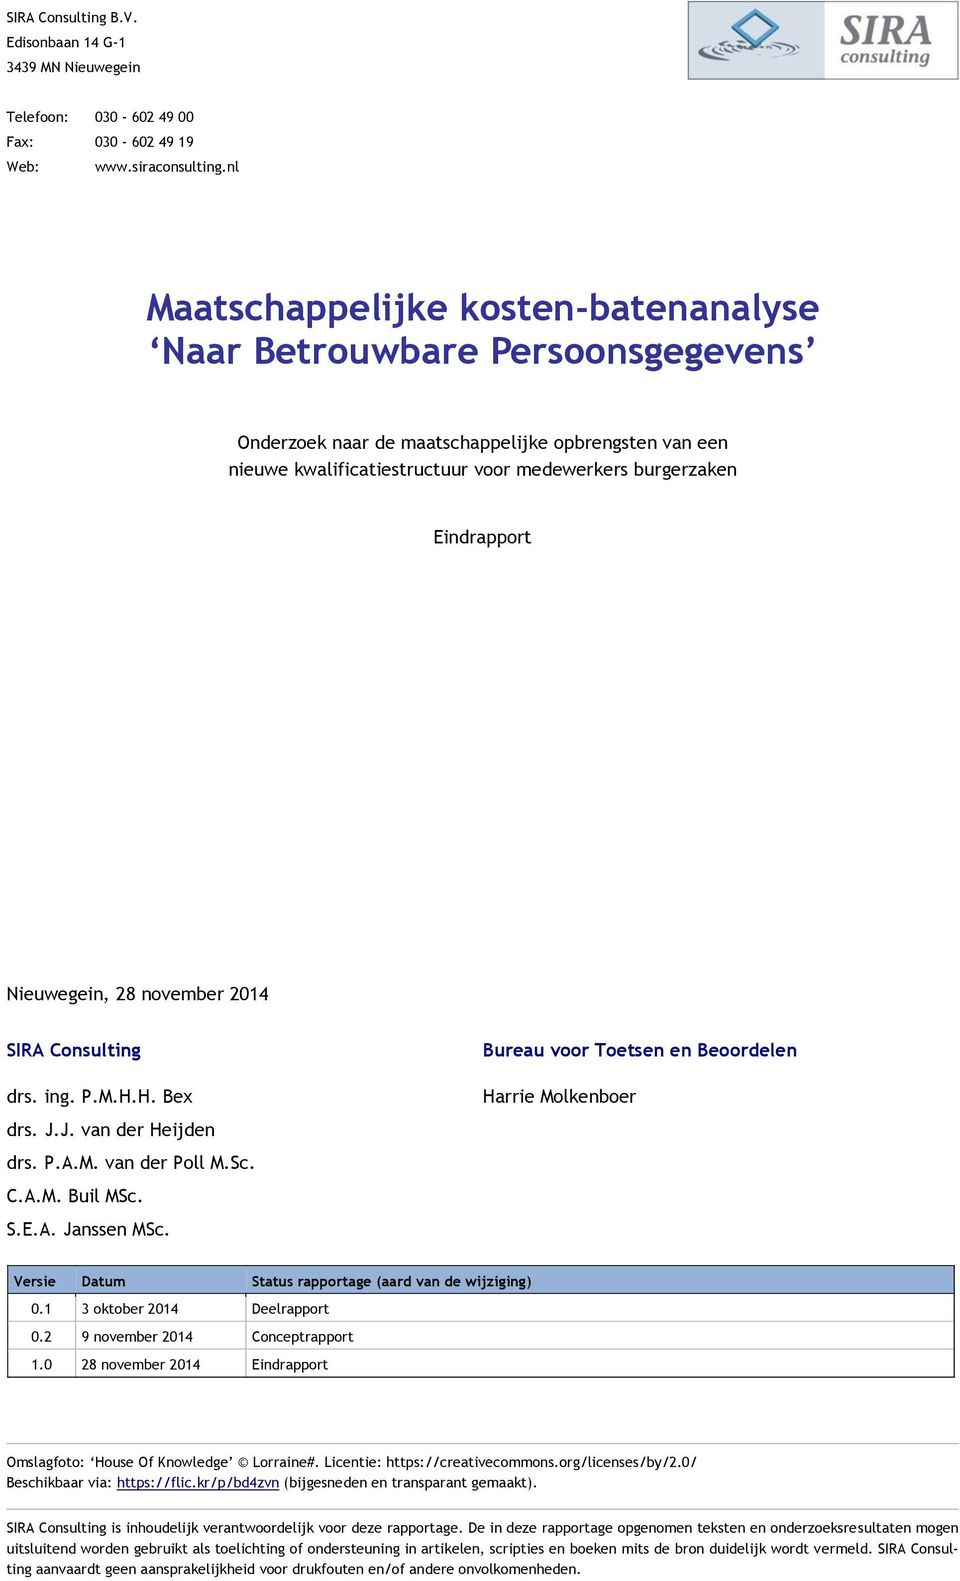 Nieuwegein, 28 november 2014 SIRA Consulting drs. ing. P.M.H.H. Bex drs. J.J. van der Heijden drs. P.A.M. van der Poll M.Sc. C.A.M. Buil MSc. S.E.A. Janssen MSc.